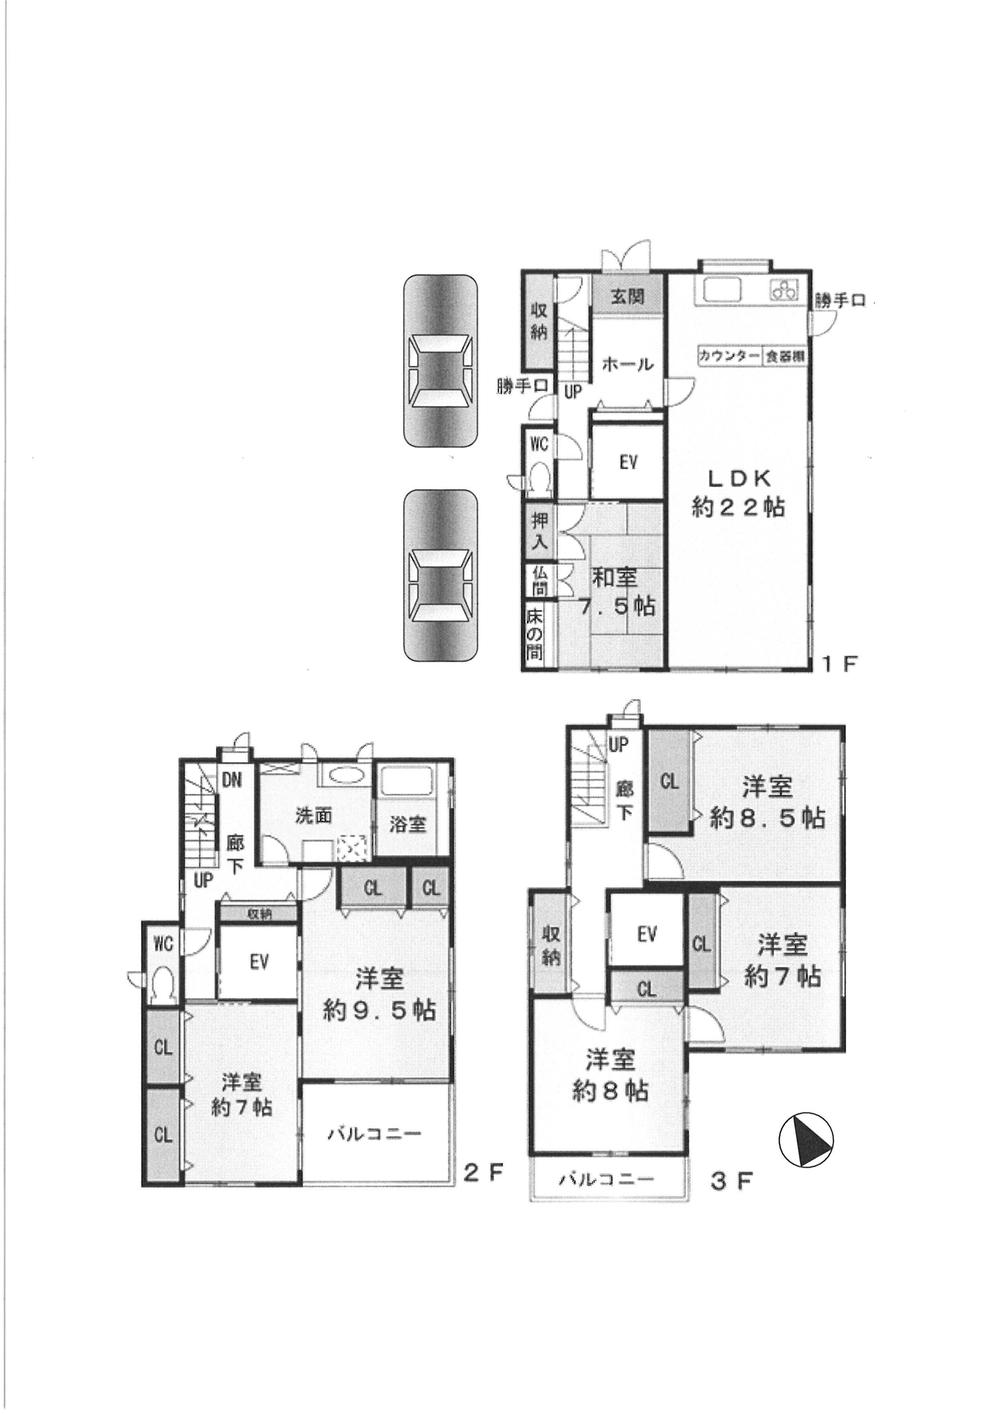 Floor plan. 44,800,000 yen, 6LDK, Land area 167.58 sq m , Building area 191.97 sq m